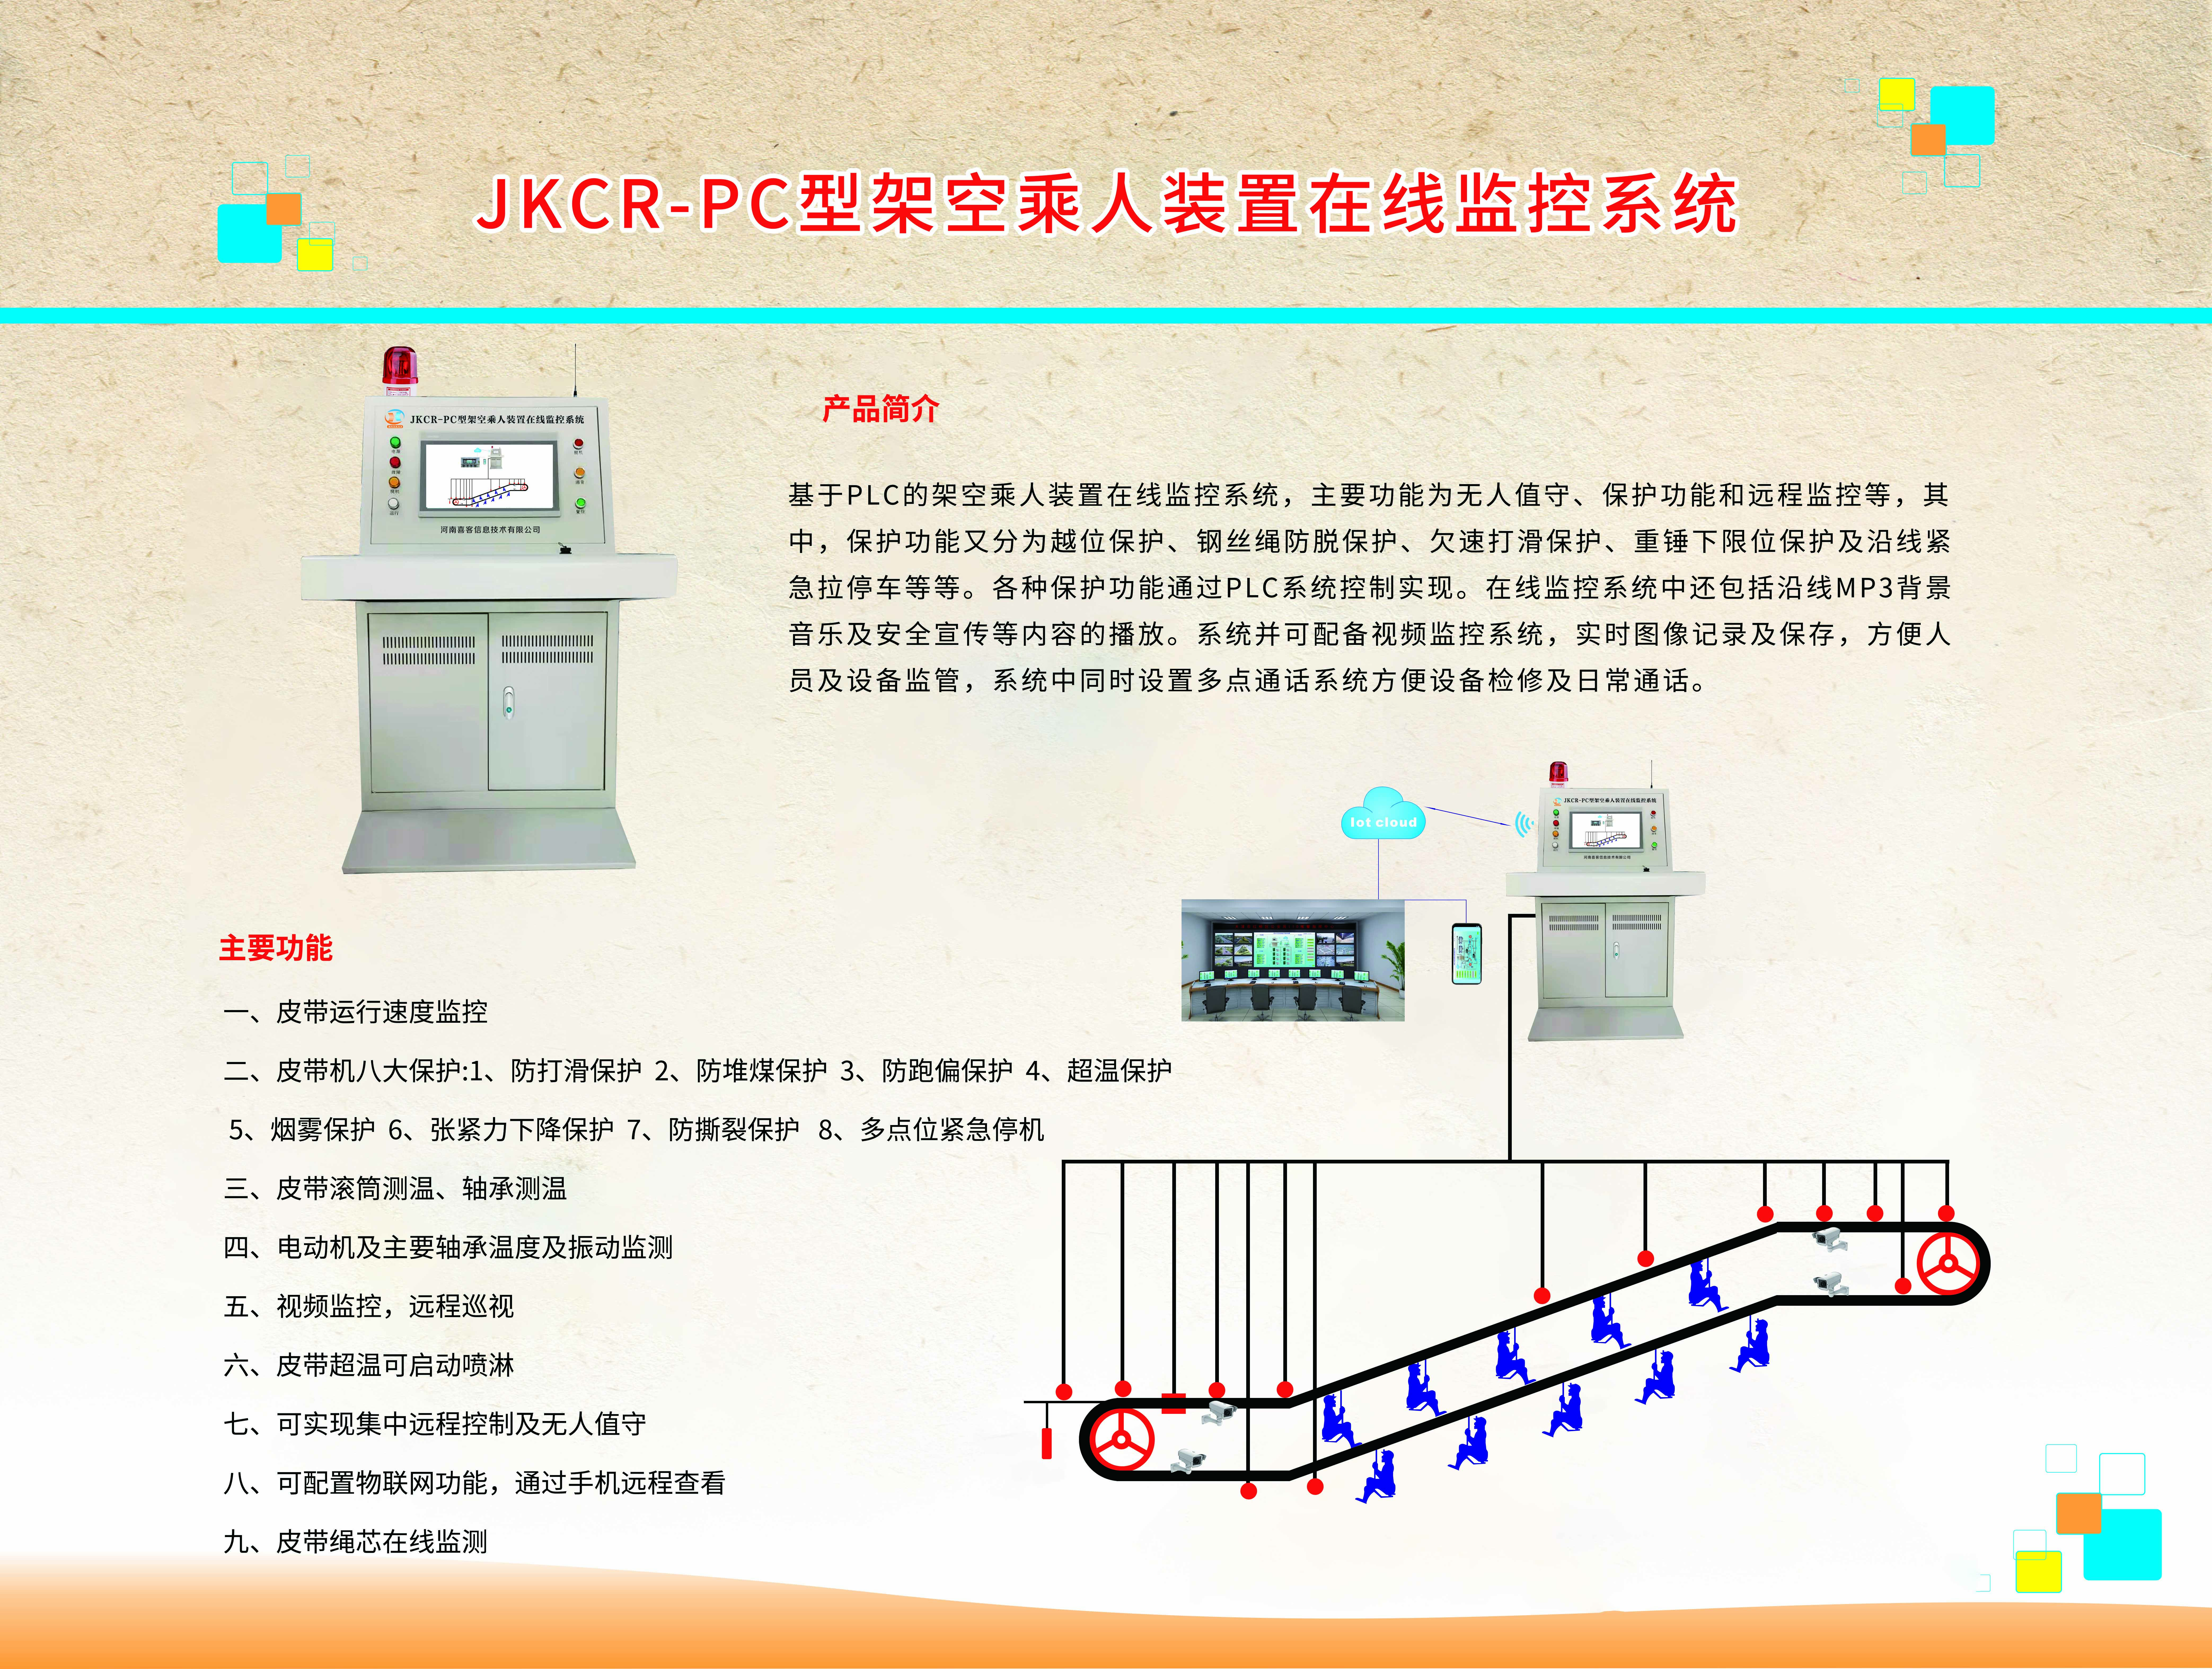 JKCR-PC架空乘人装置在线监测控制系统 俗称猴车在线监测控制系统图片